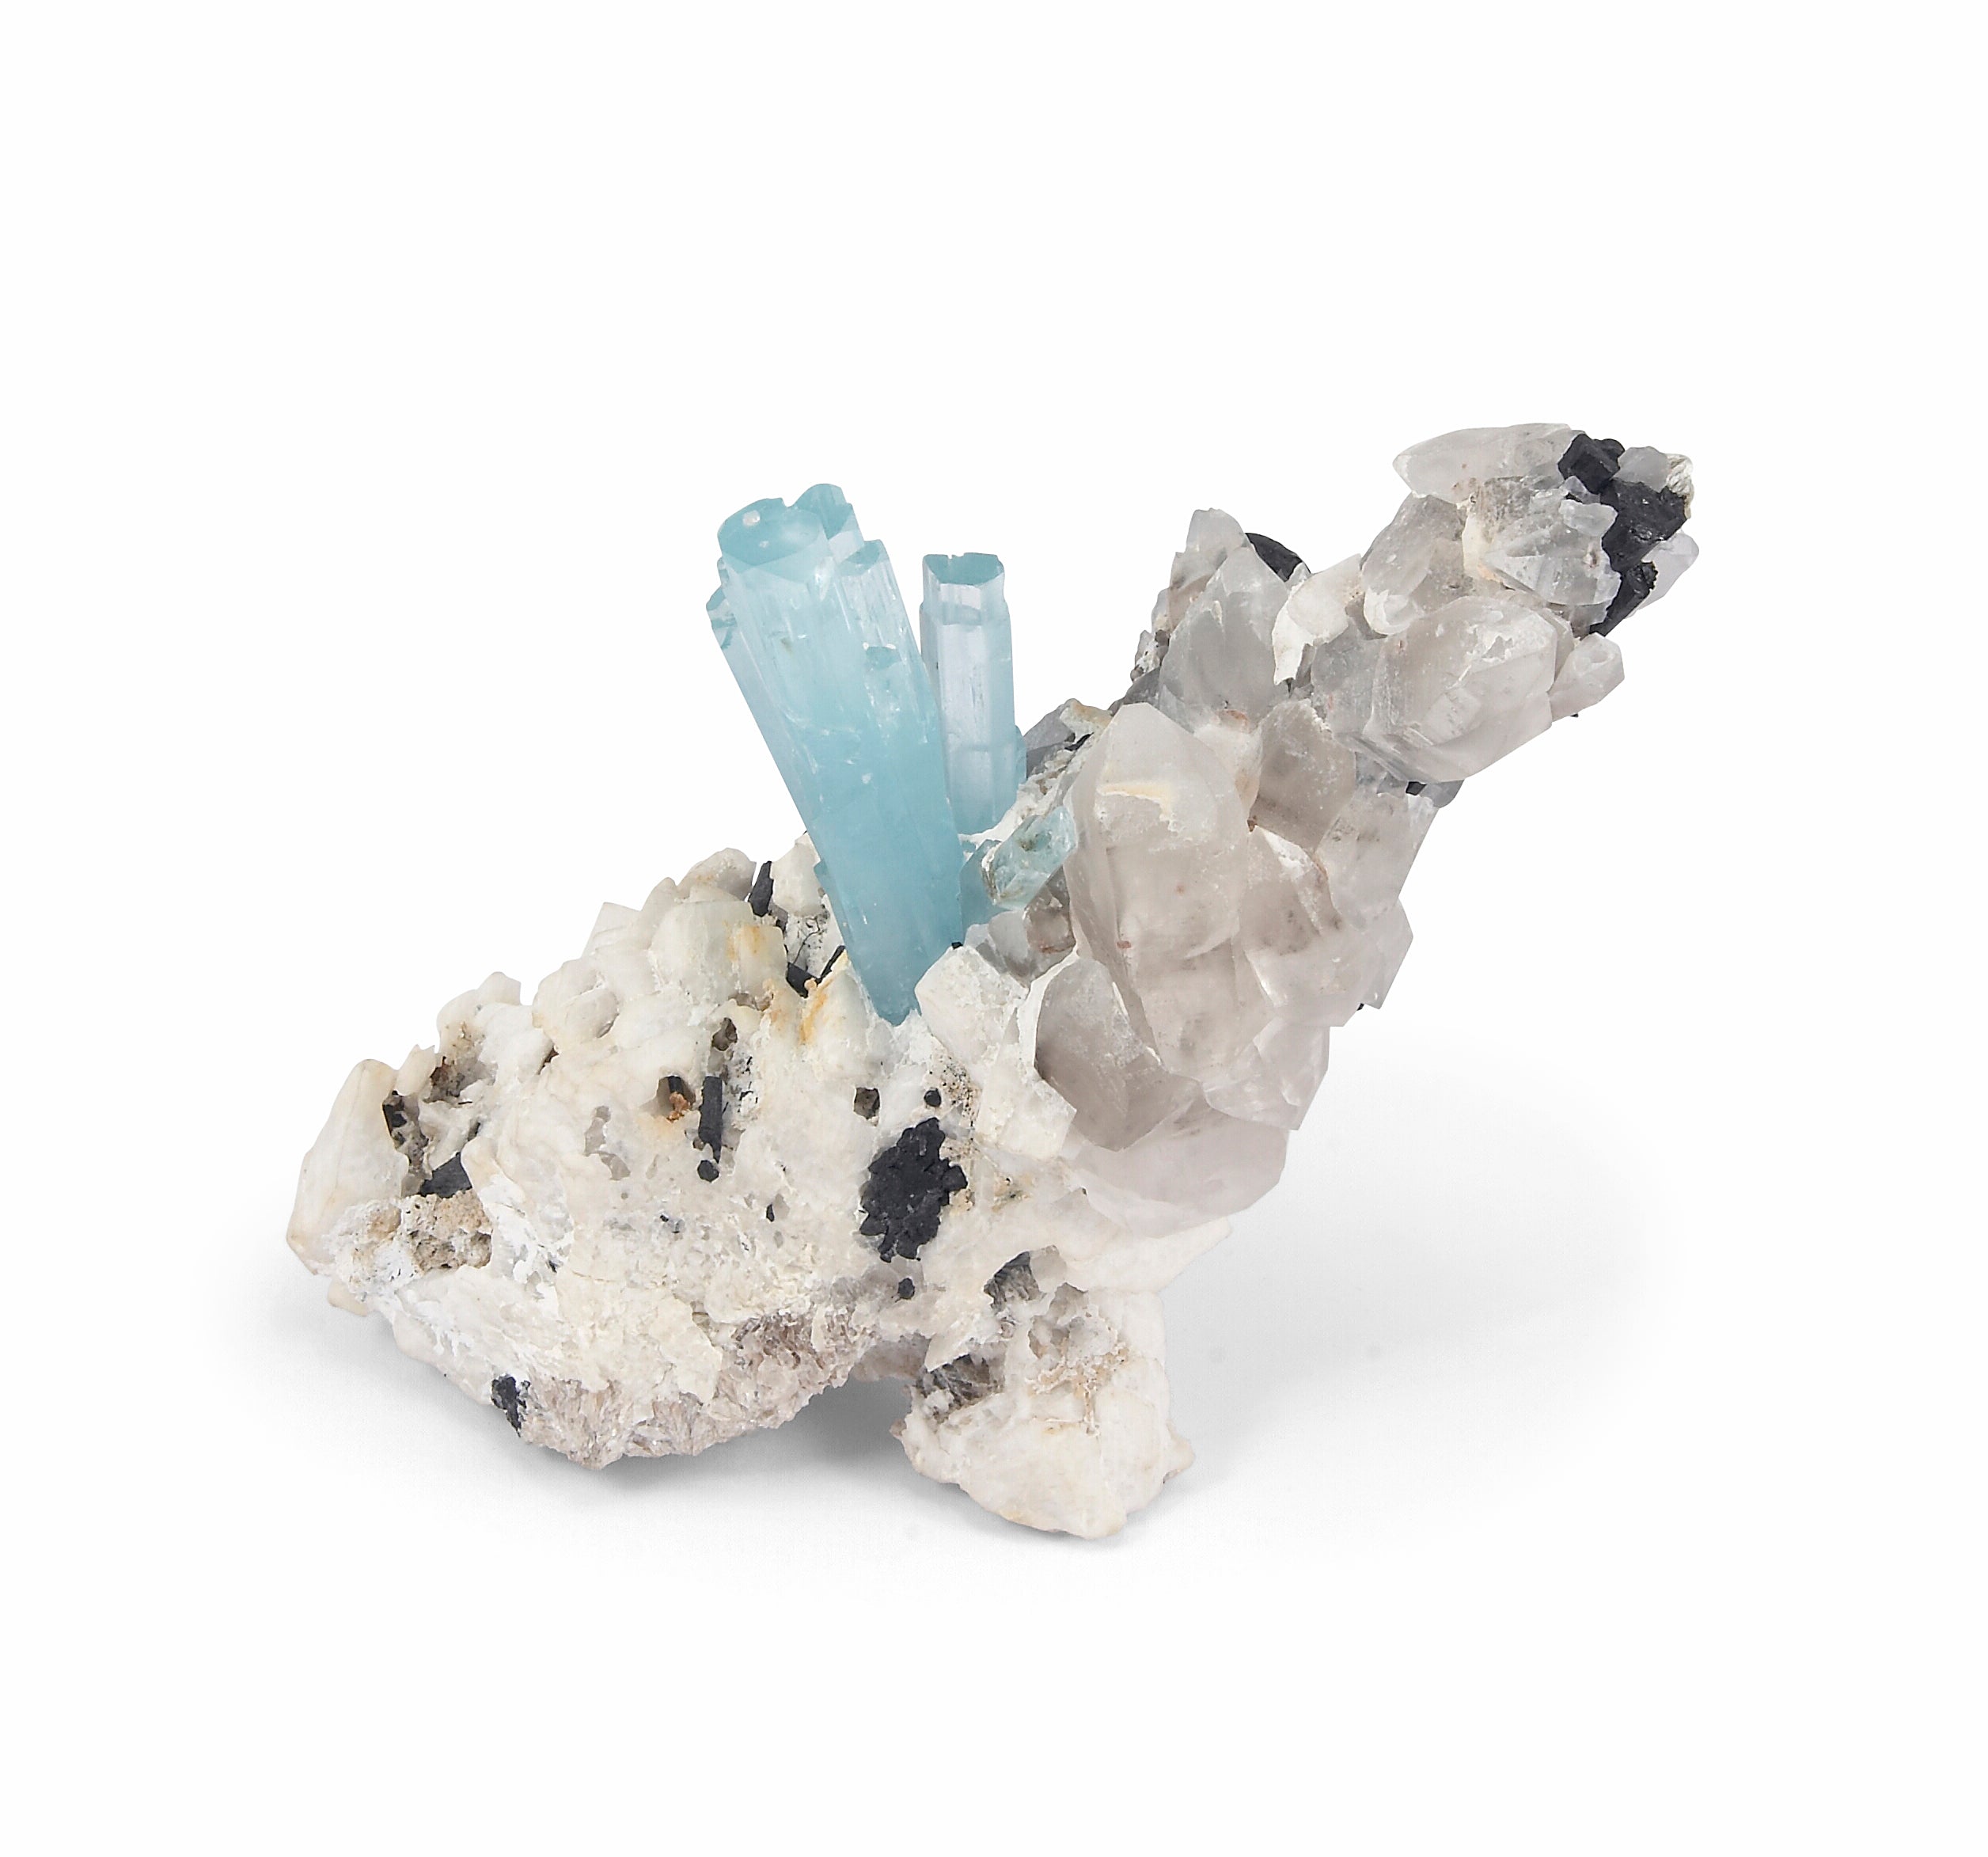 Aquamarine Spray 6.5 inch 2.23 lbs Natural Gem Crystal with Quartz and Black Tourmaline - MSCON-128 - Crystalarium